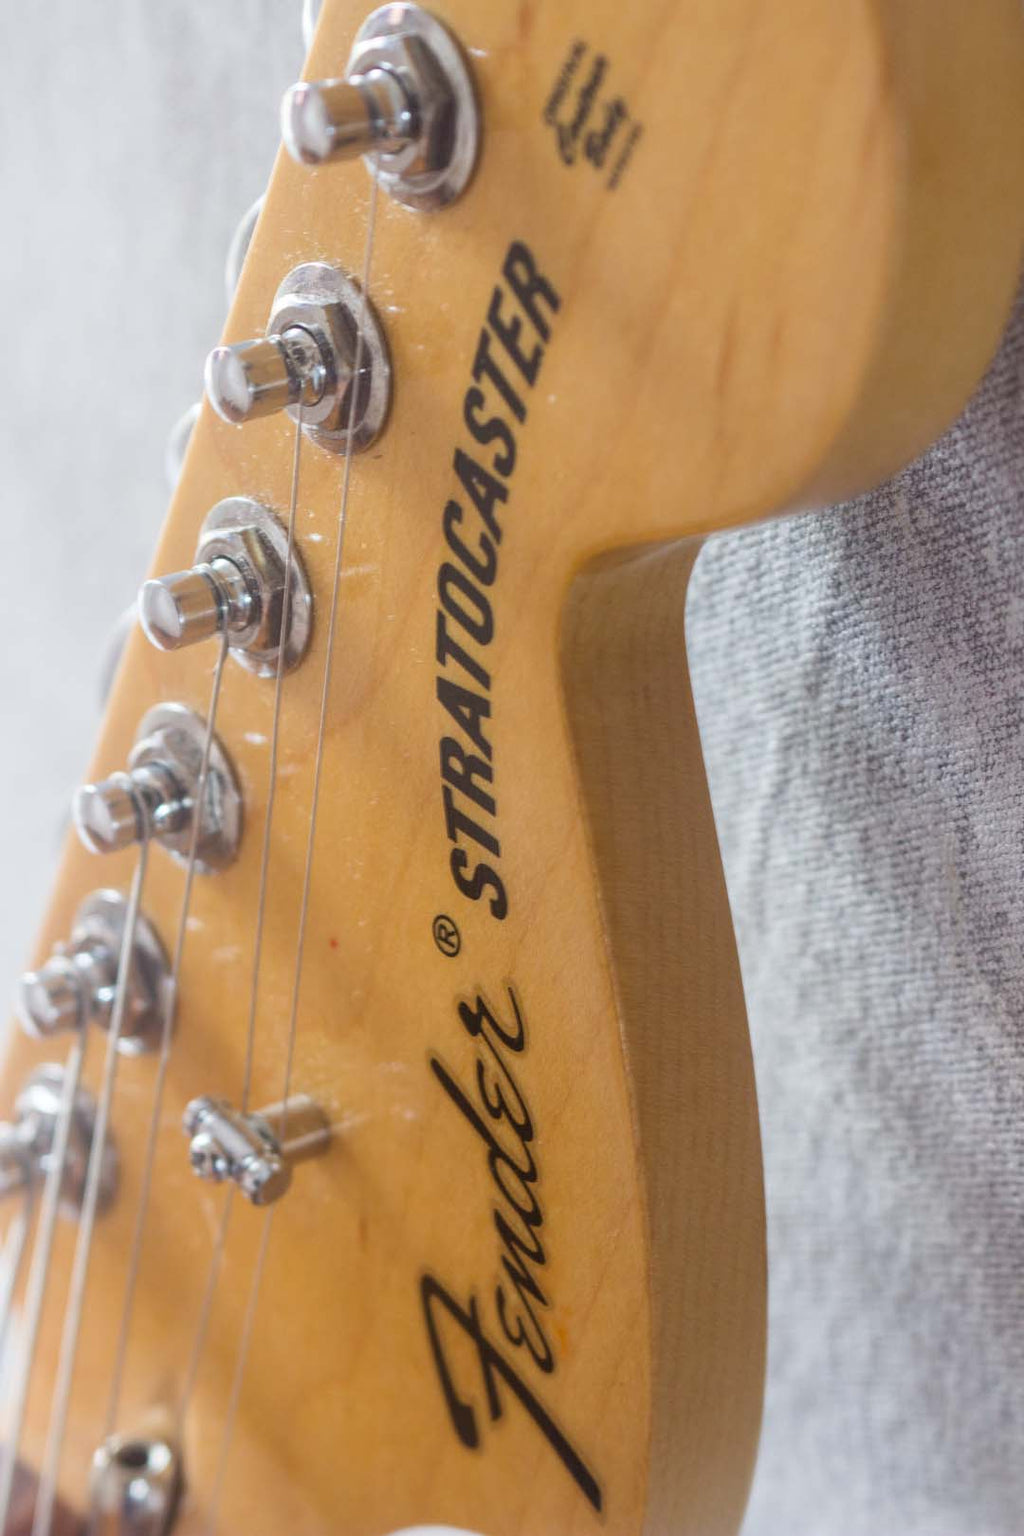 Fender Stratocaster Partscaster Relic Sunburst 2018